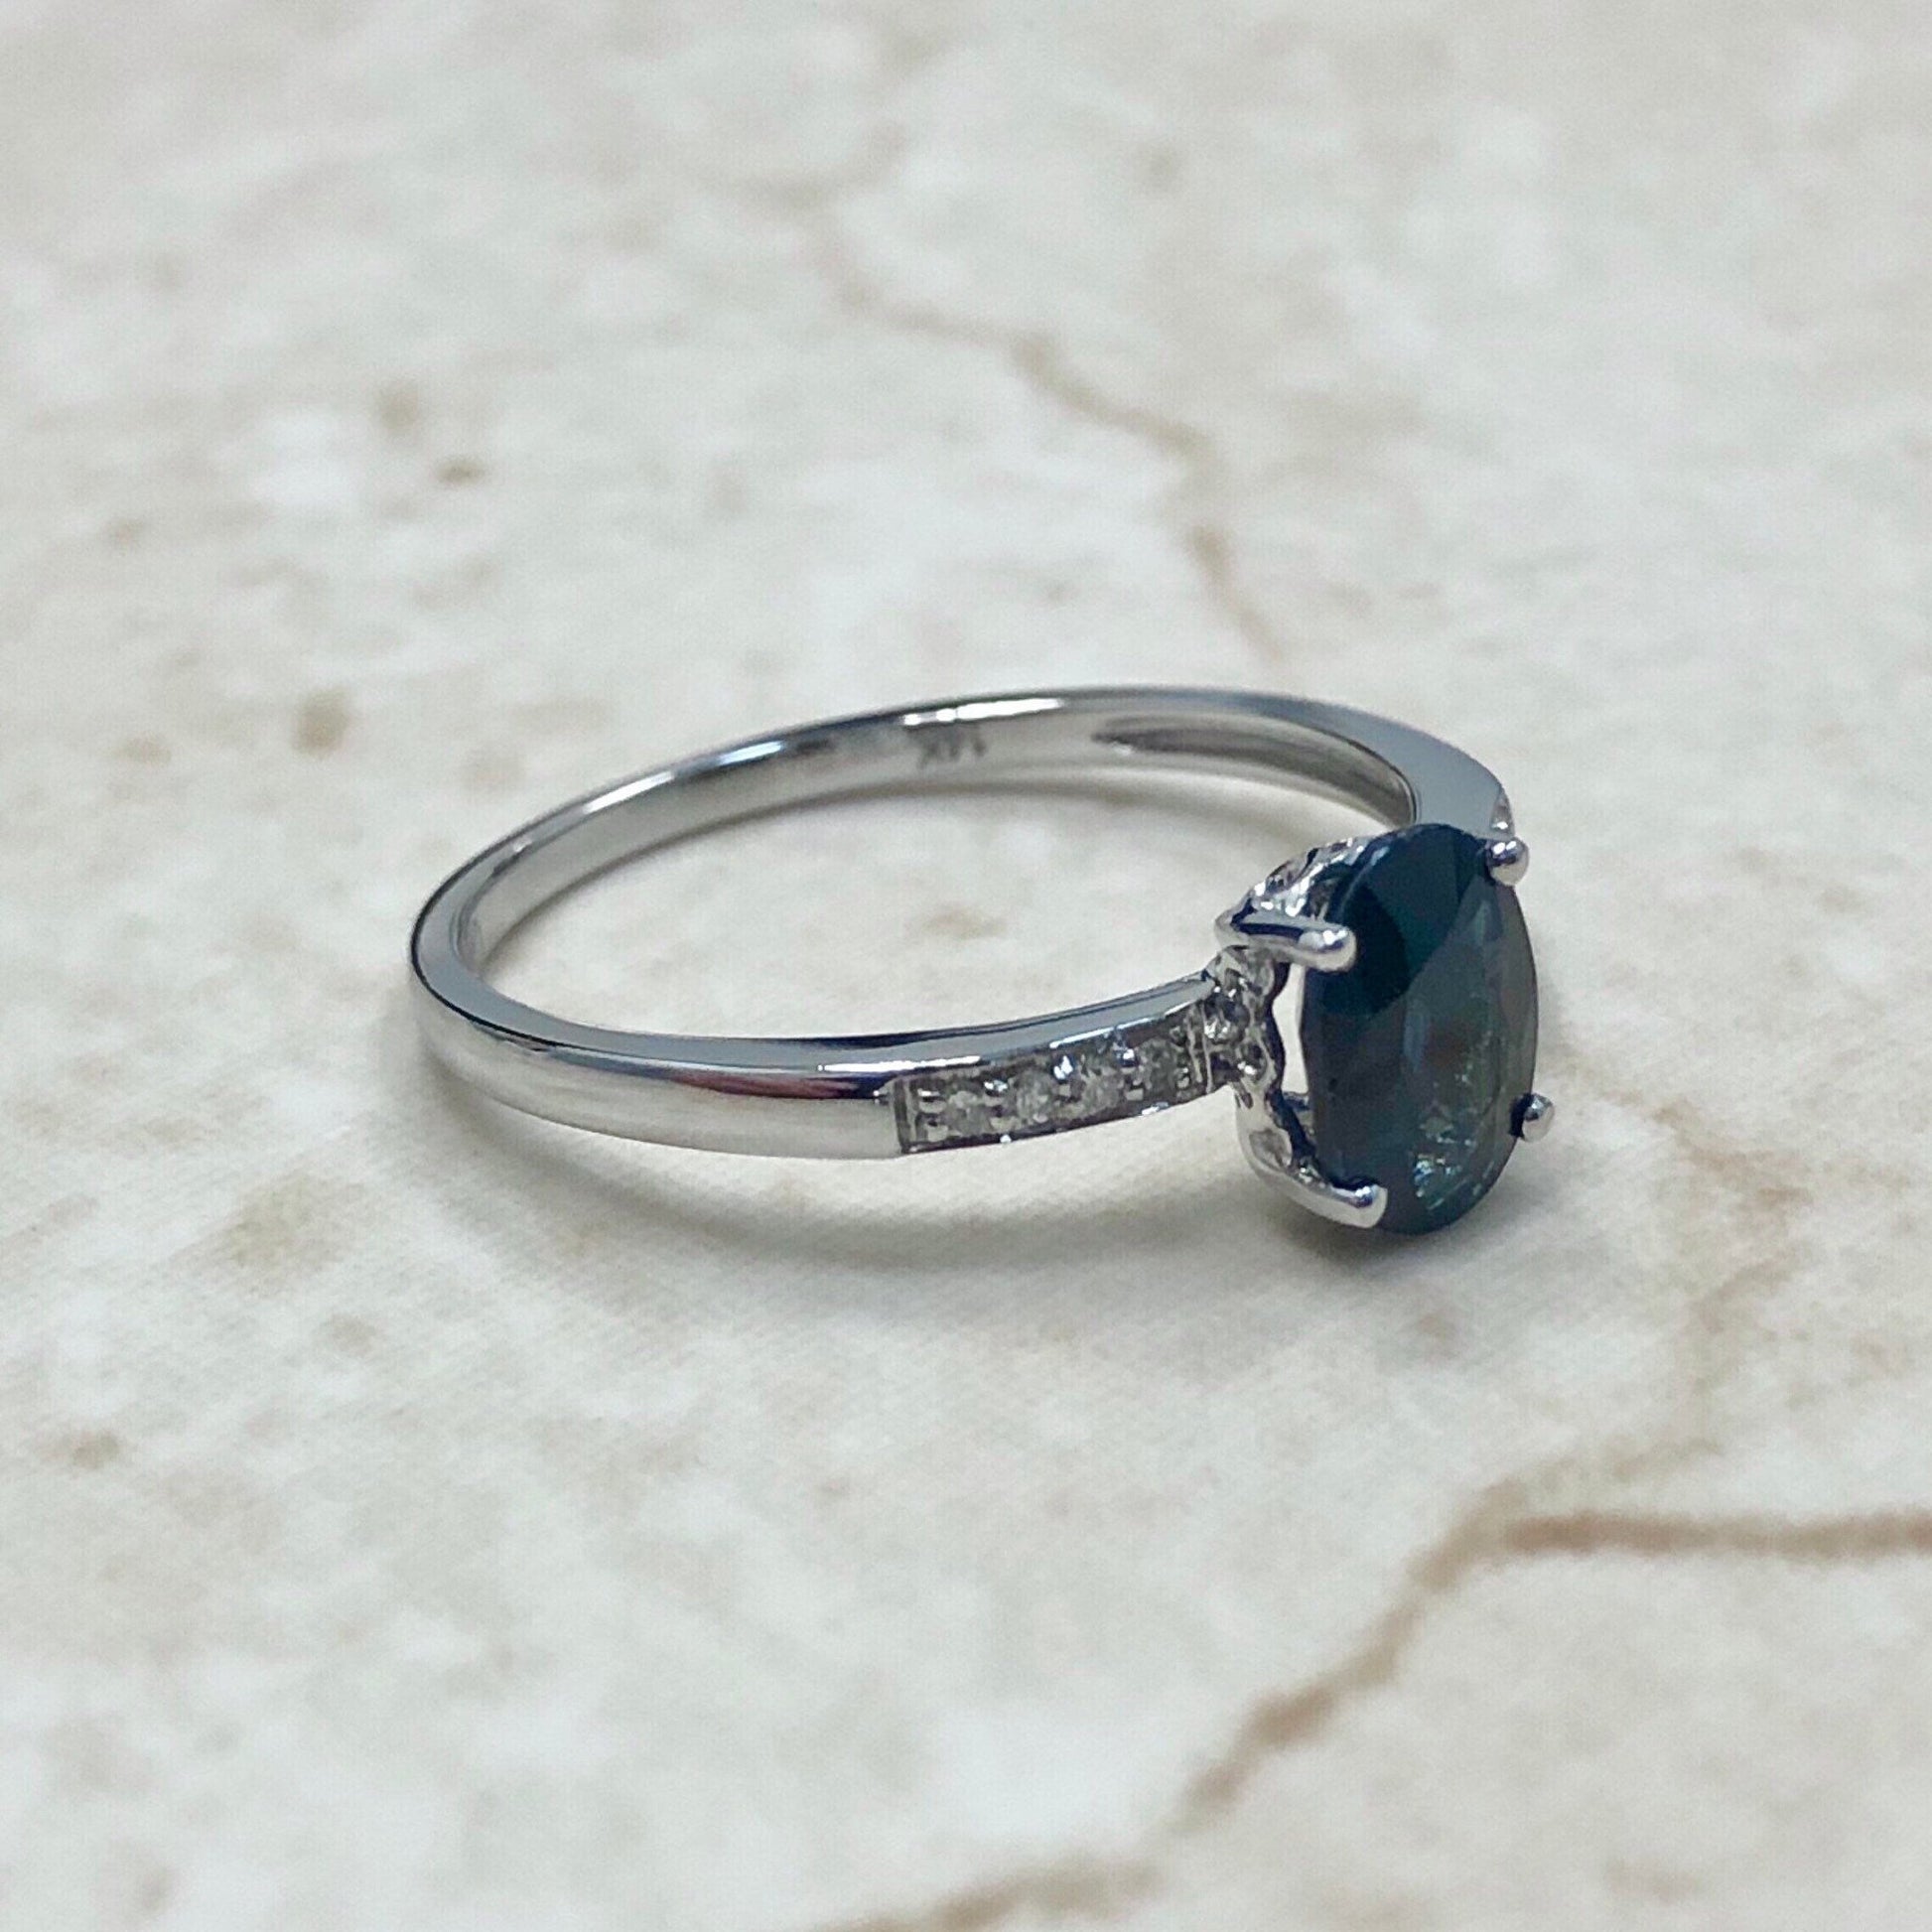 14K Oval Sapphire & Diamond Ring - White Gold Sapphire Solitaire Ring - Blue Sapphire Ring - September Birthstone - Birthday Gift For Her